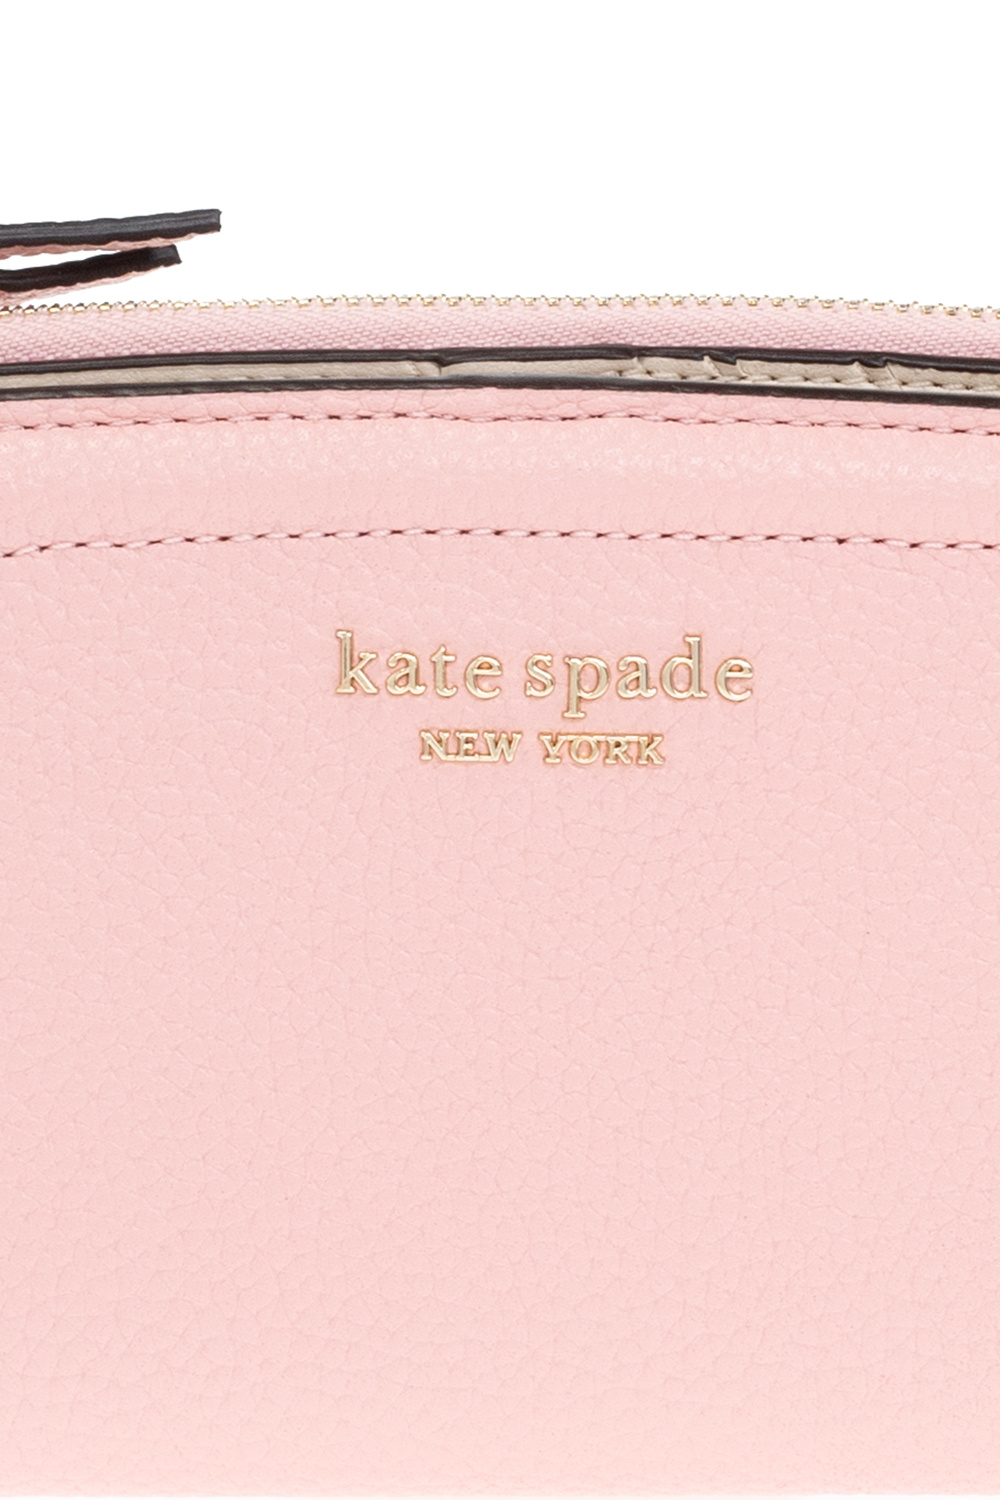 Kate Spade ’Knott Slim’ wallet with logo